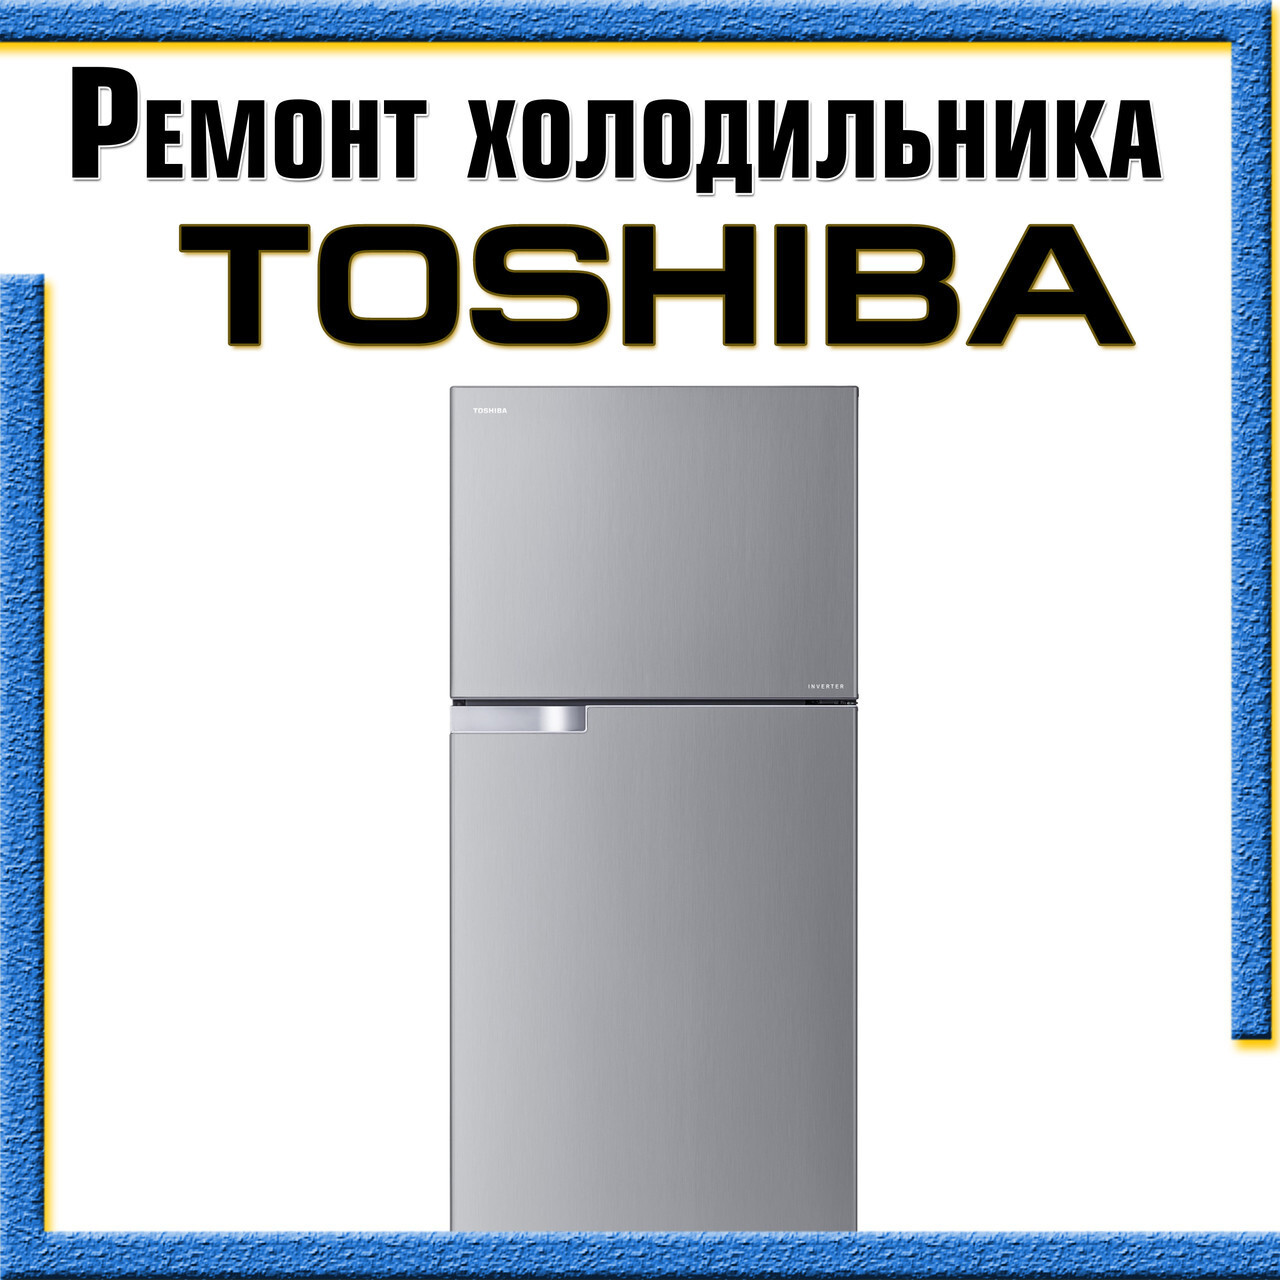 Ремонт холодильников toshiba. Холодильник Тошиба. Ремонт холодильников Тошиба. Холодильник Тошиба сервисный центр. Петли холодильника Тошиба.